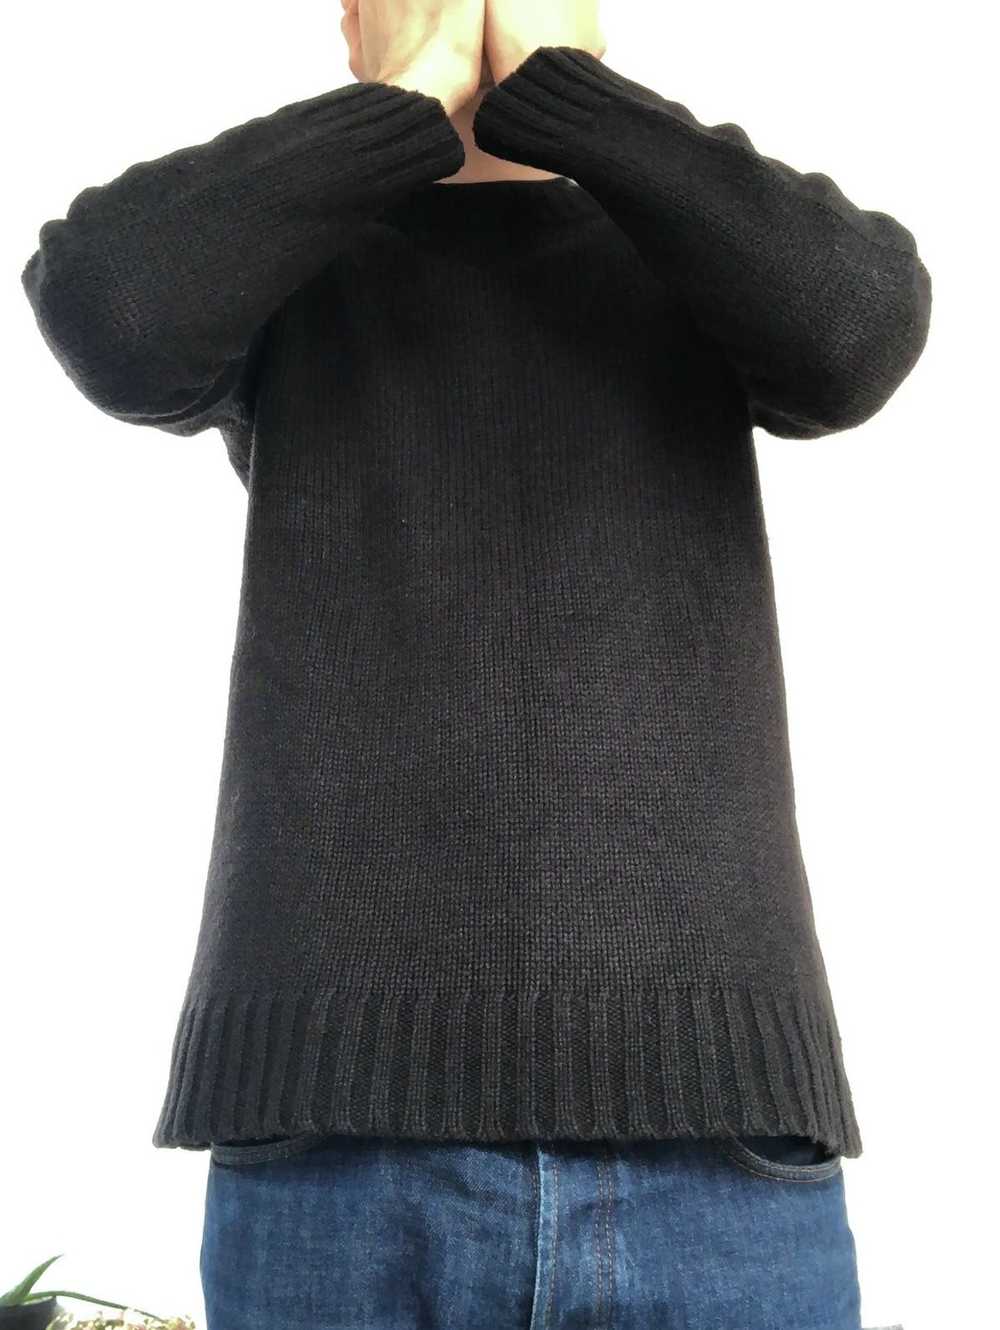 Marimekko Marimekko wool angora blend knit sweater - image 4